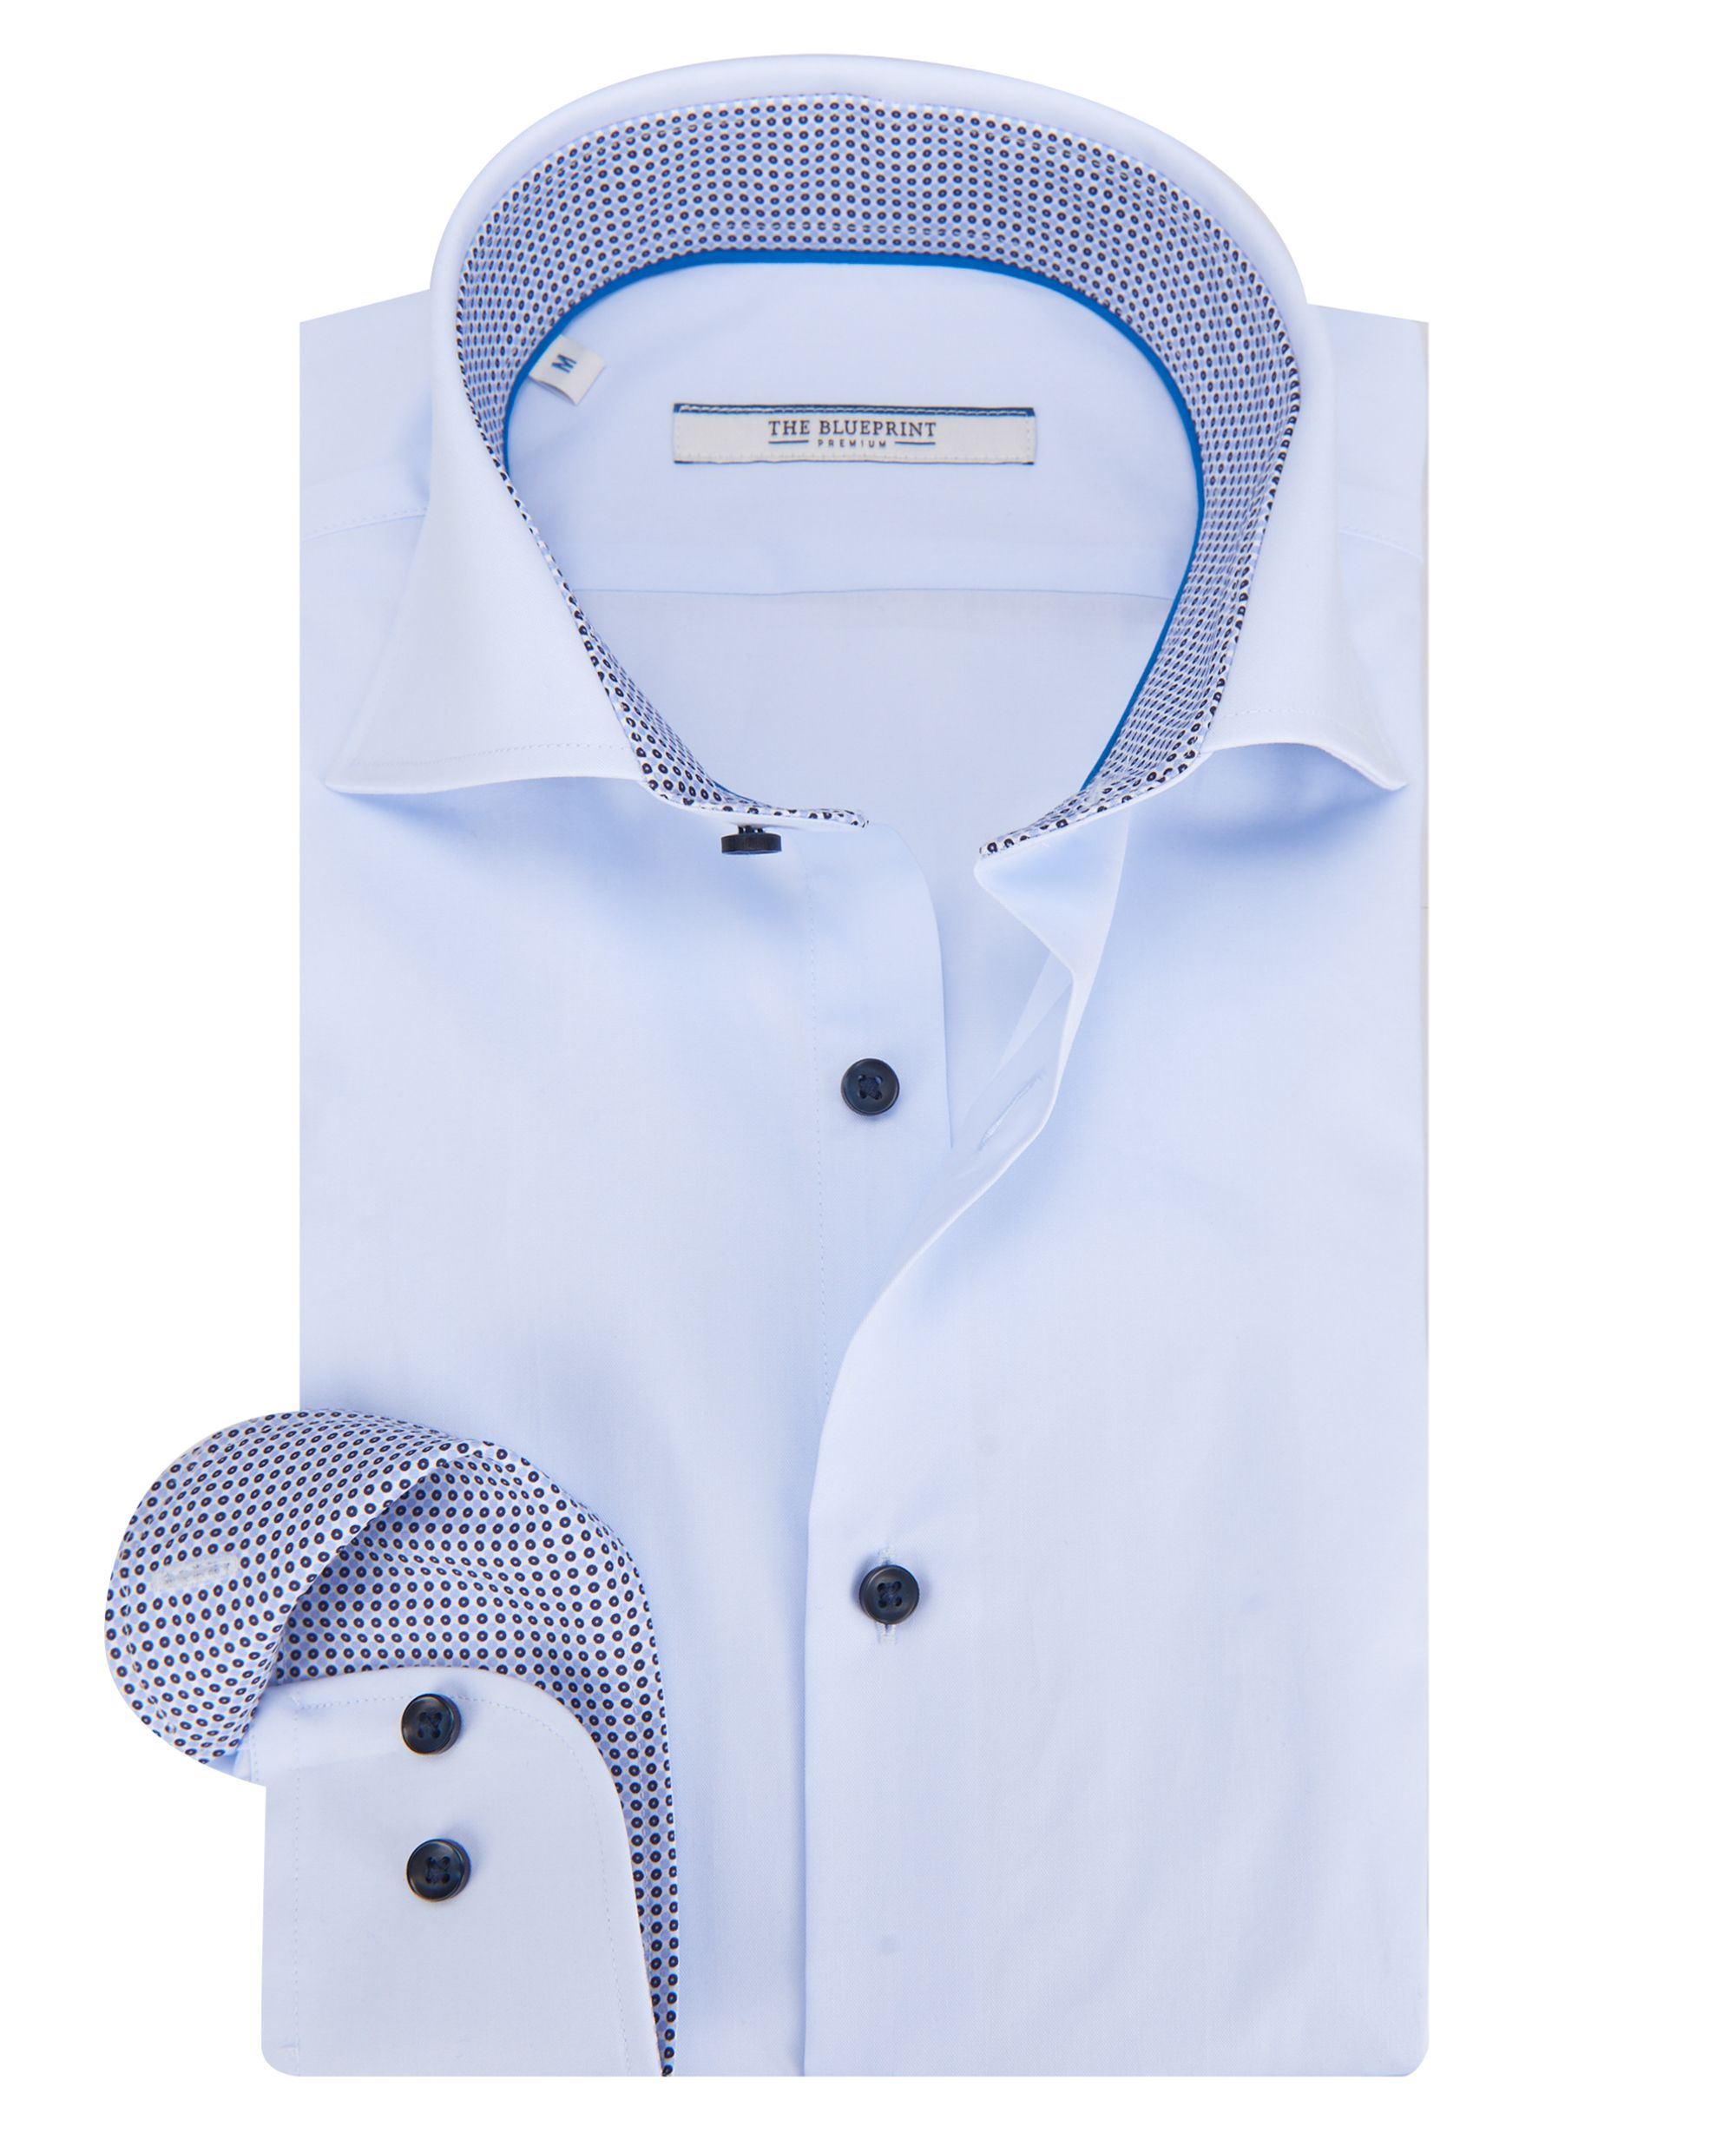 The BLUEPRINT Premium Trendy overhemd LM L.BLUE 084487-001-L